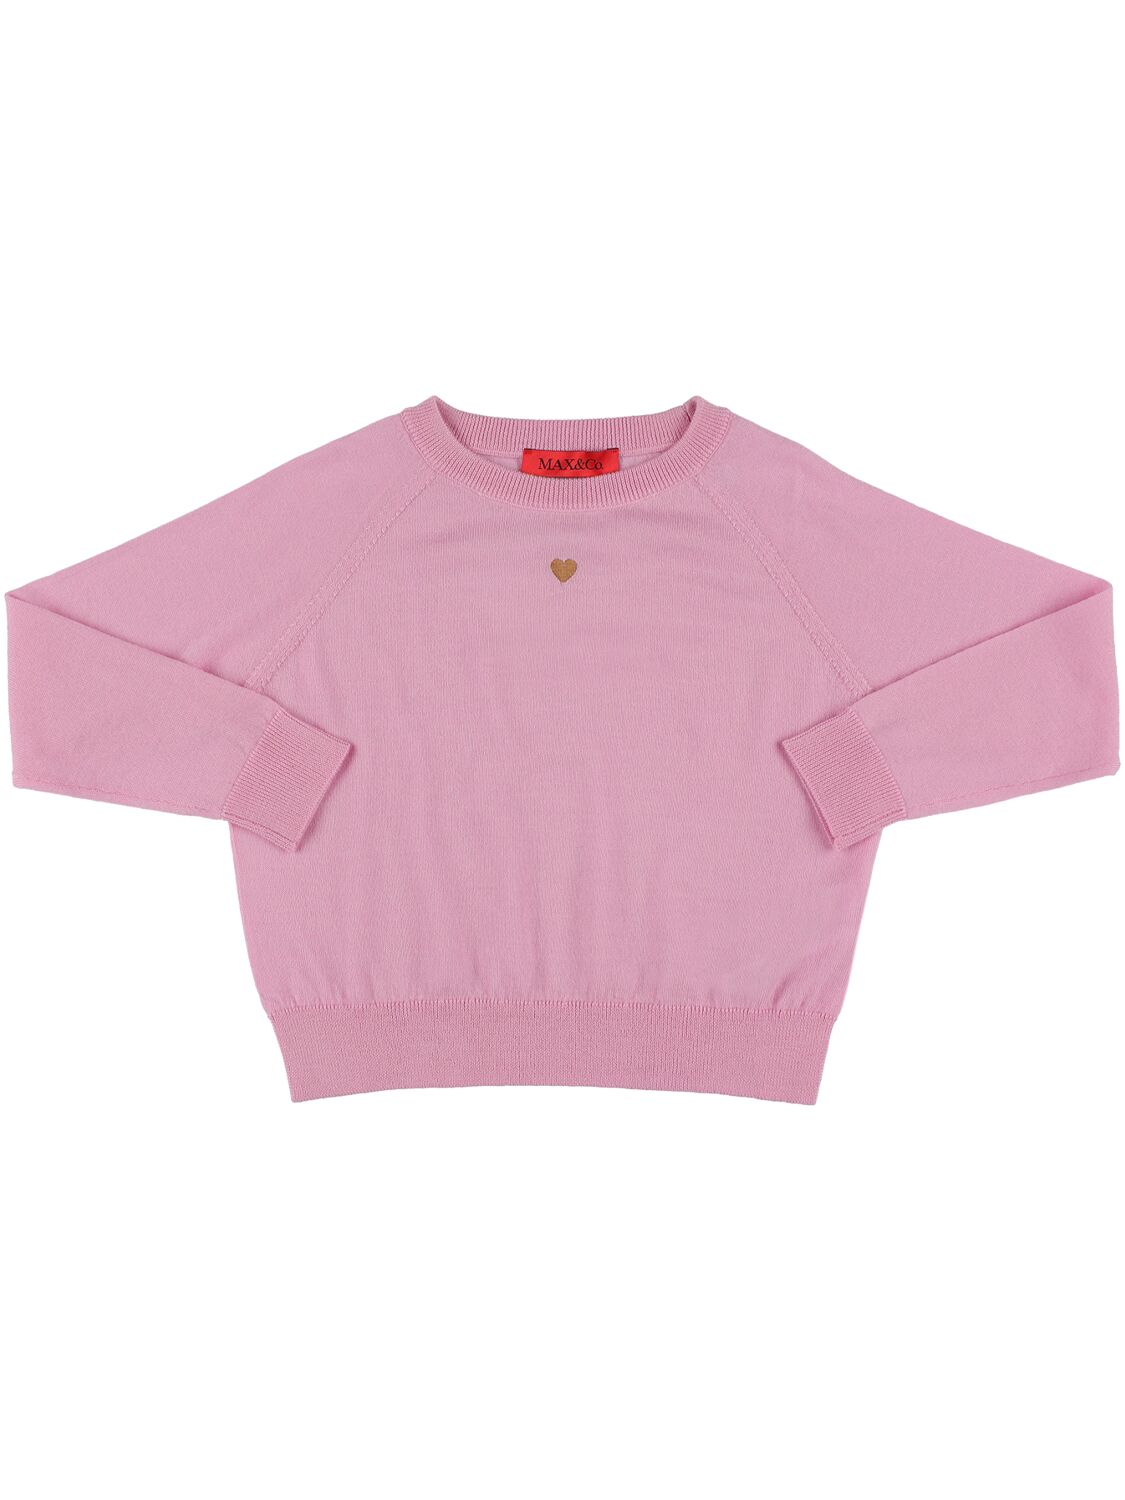 Max & Co Kids' Wool Knit Jumper In Pink